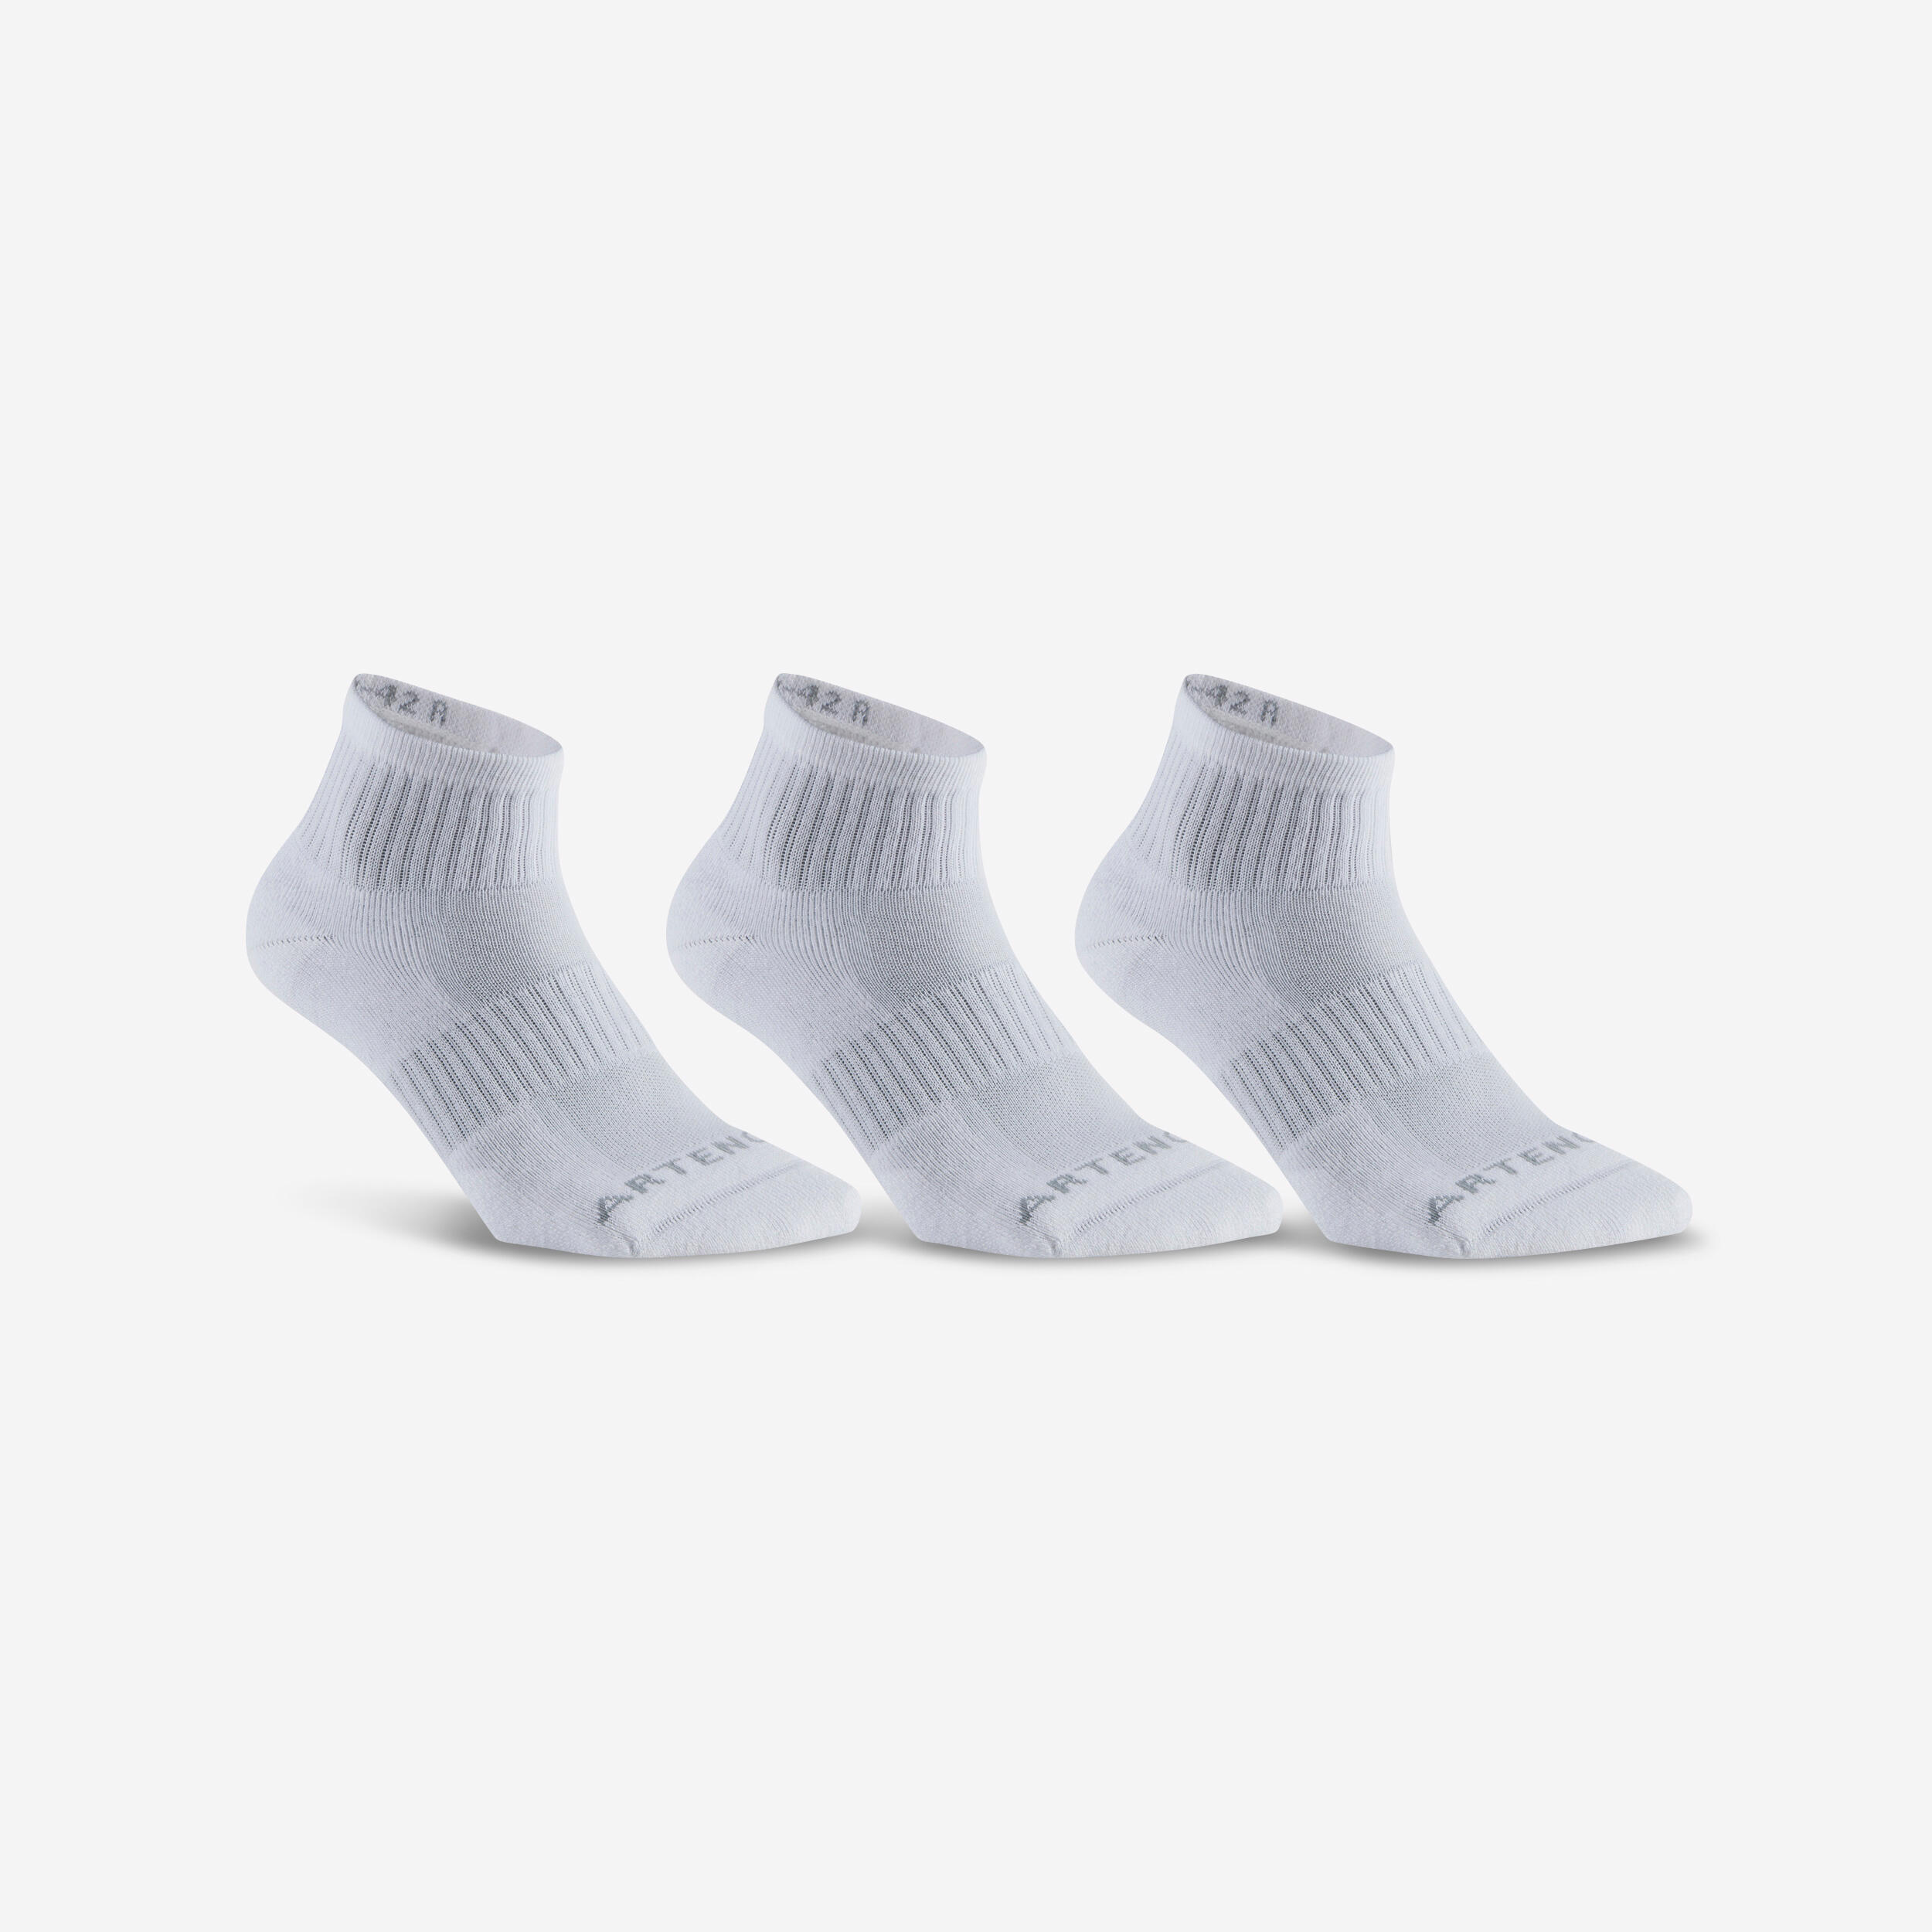 ARTENGO RS 500 Mid Sports Socks Tri-Pack - White